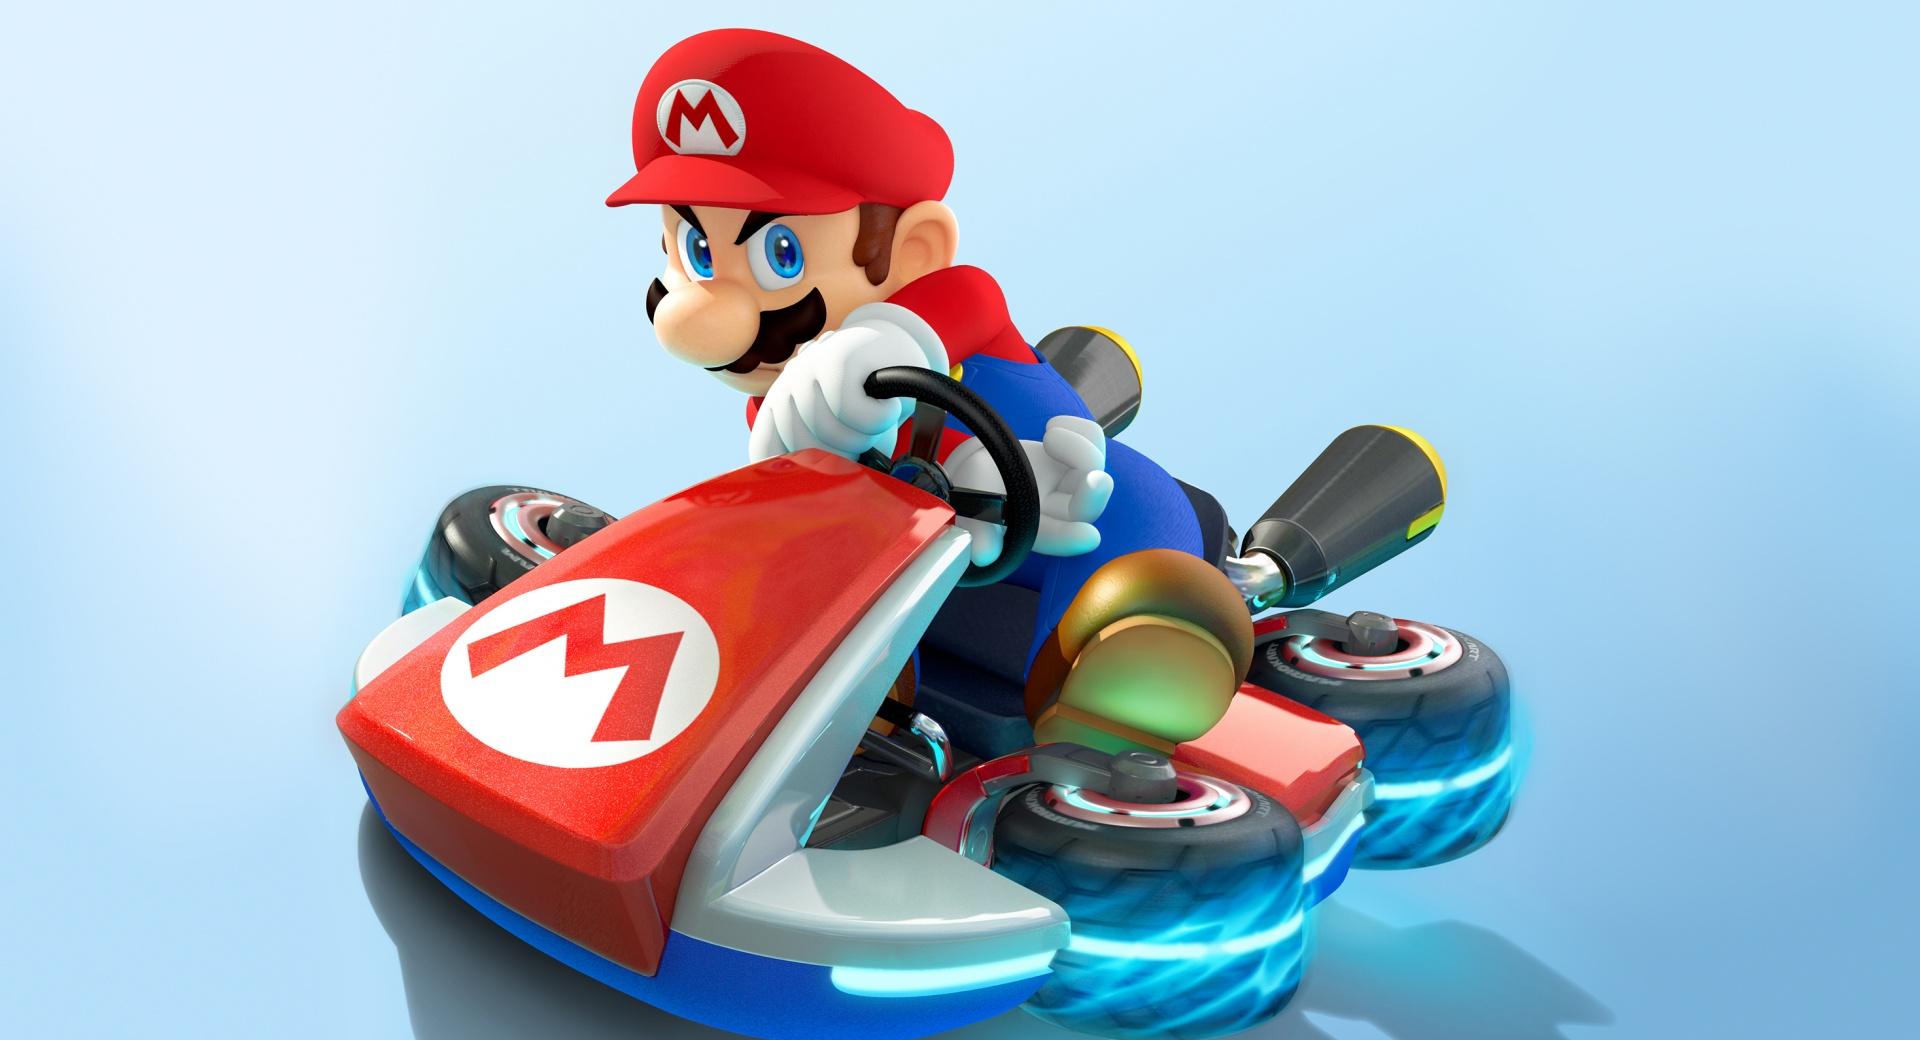 Mario Kart 8 - Mario at 1024 x 768 size wallpapers HD quality